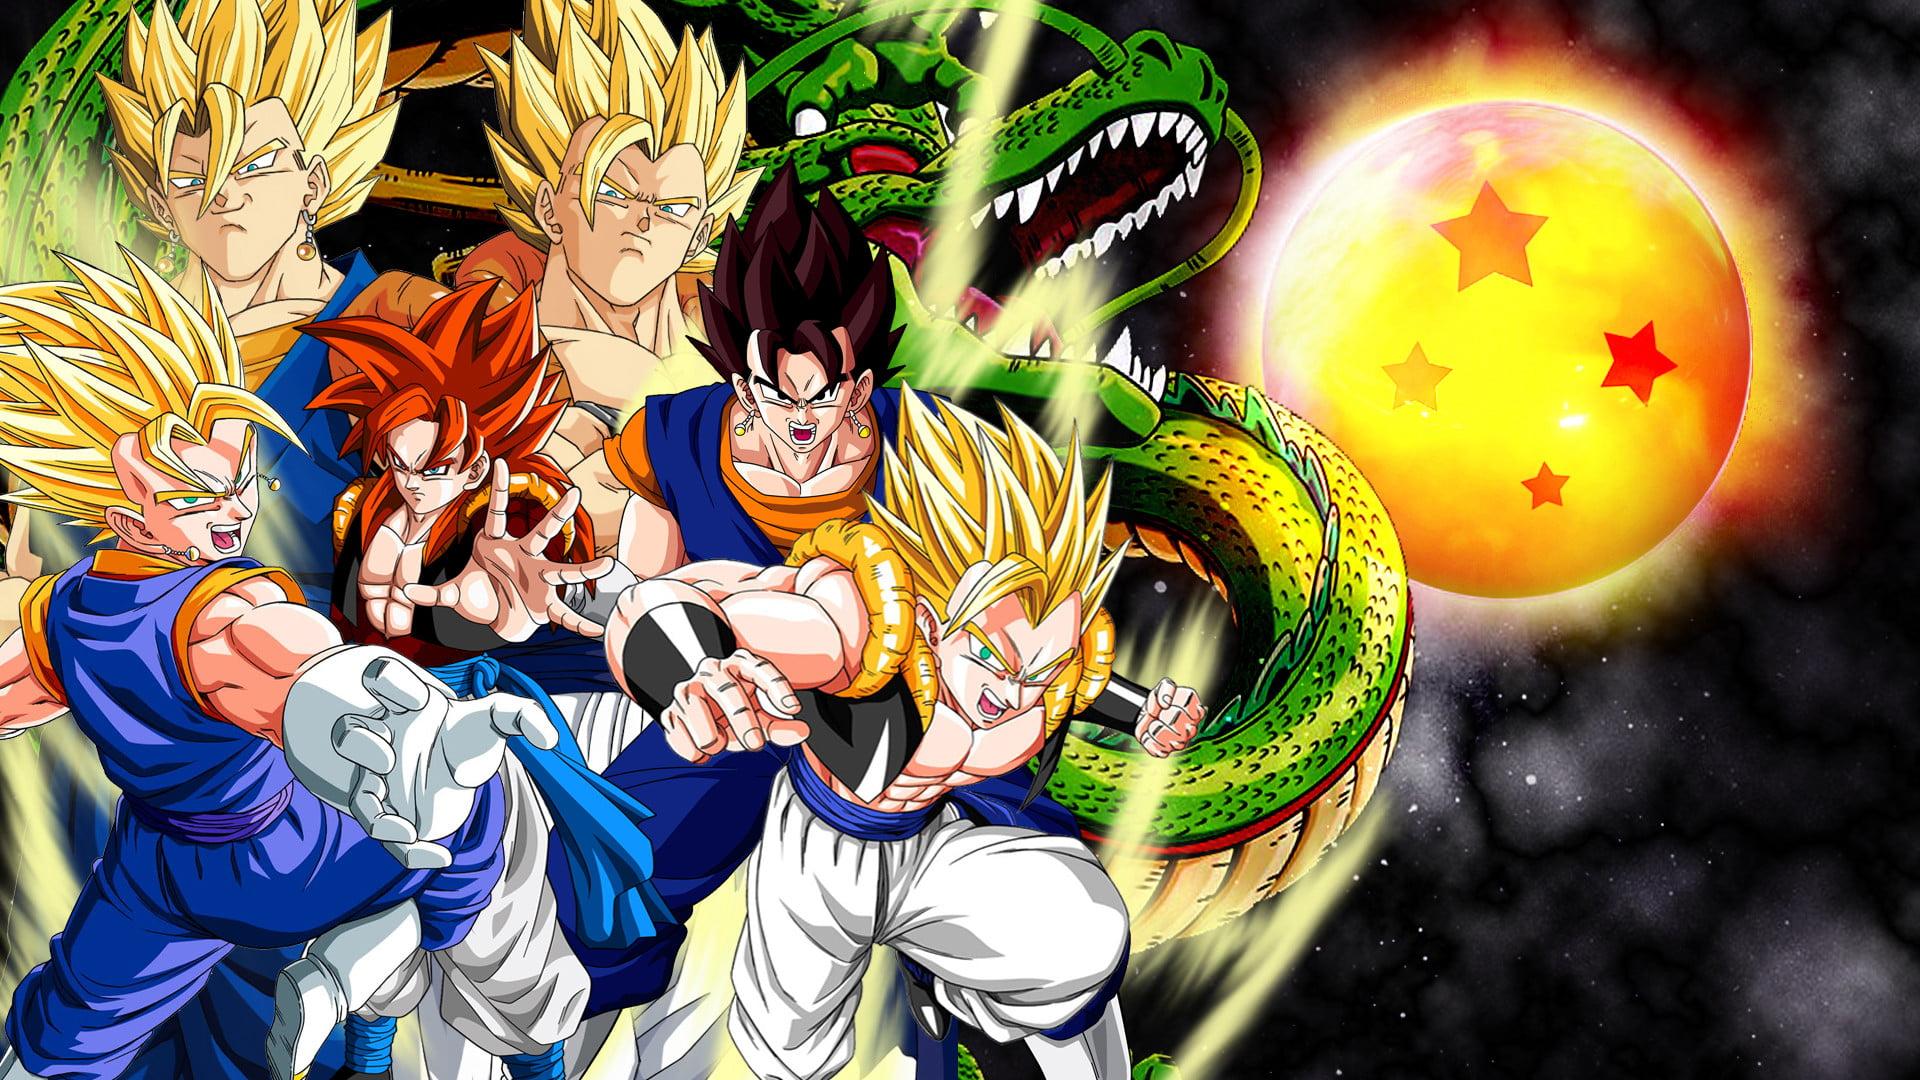 Son Goku super saiyan forms and Shenron illustration HD wallpaper